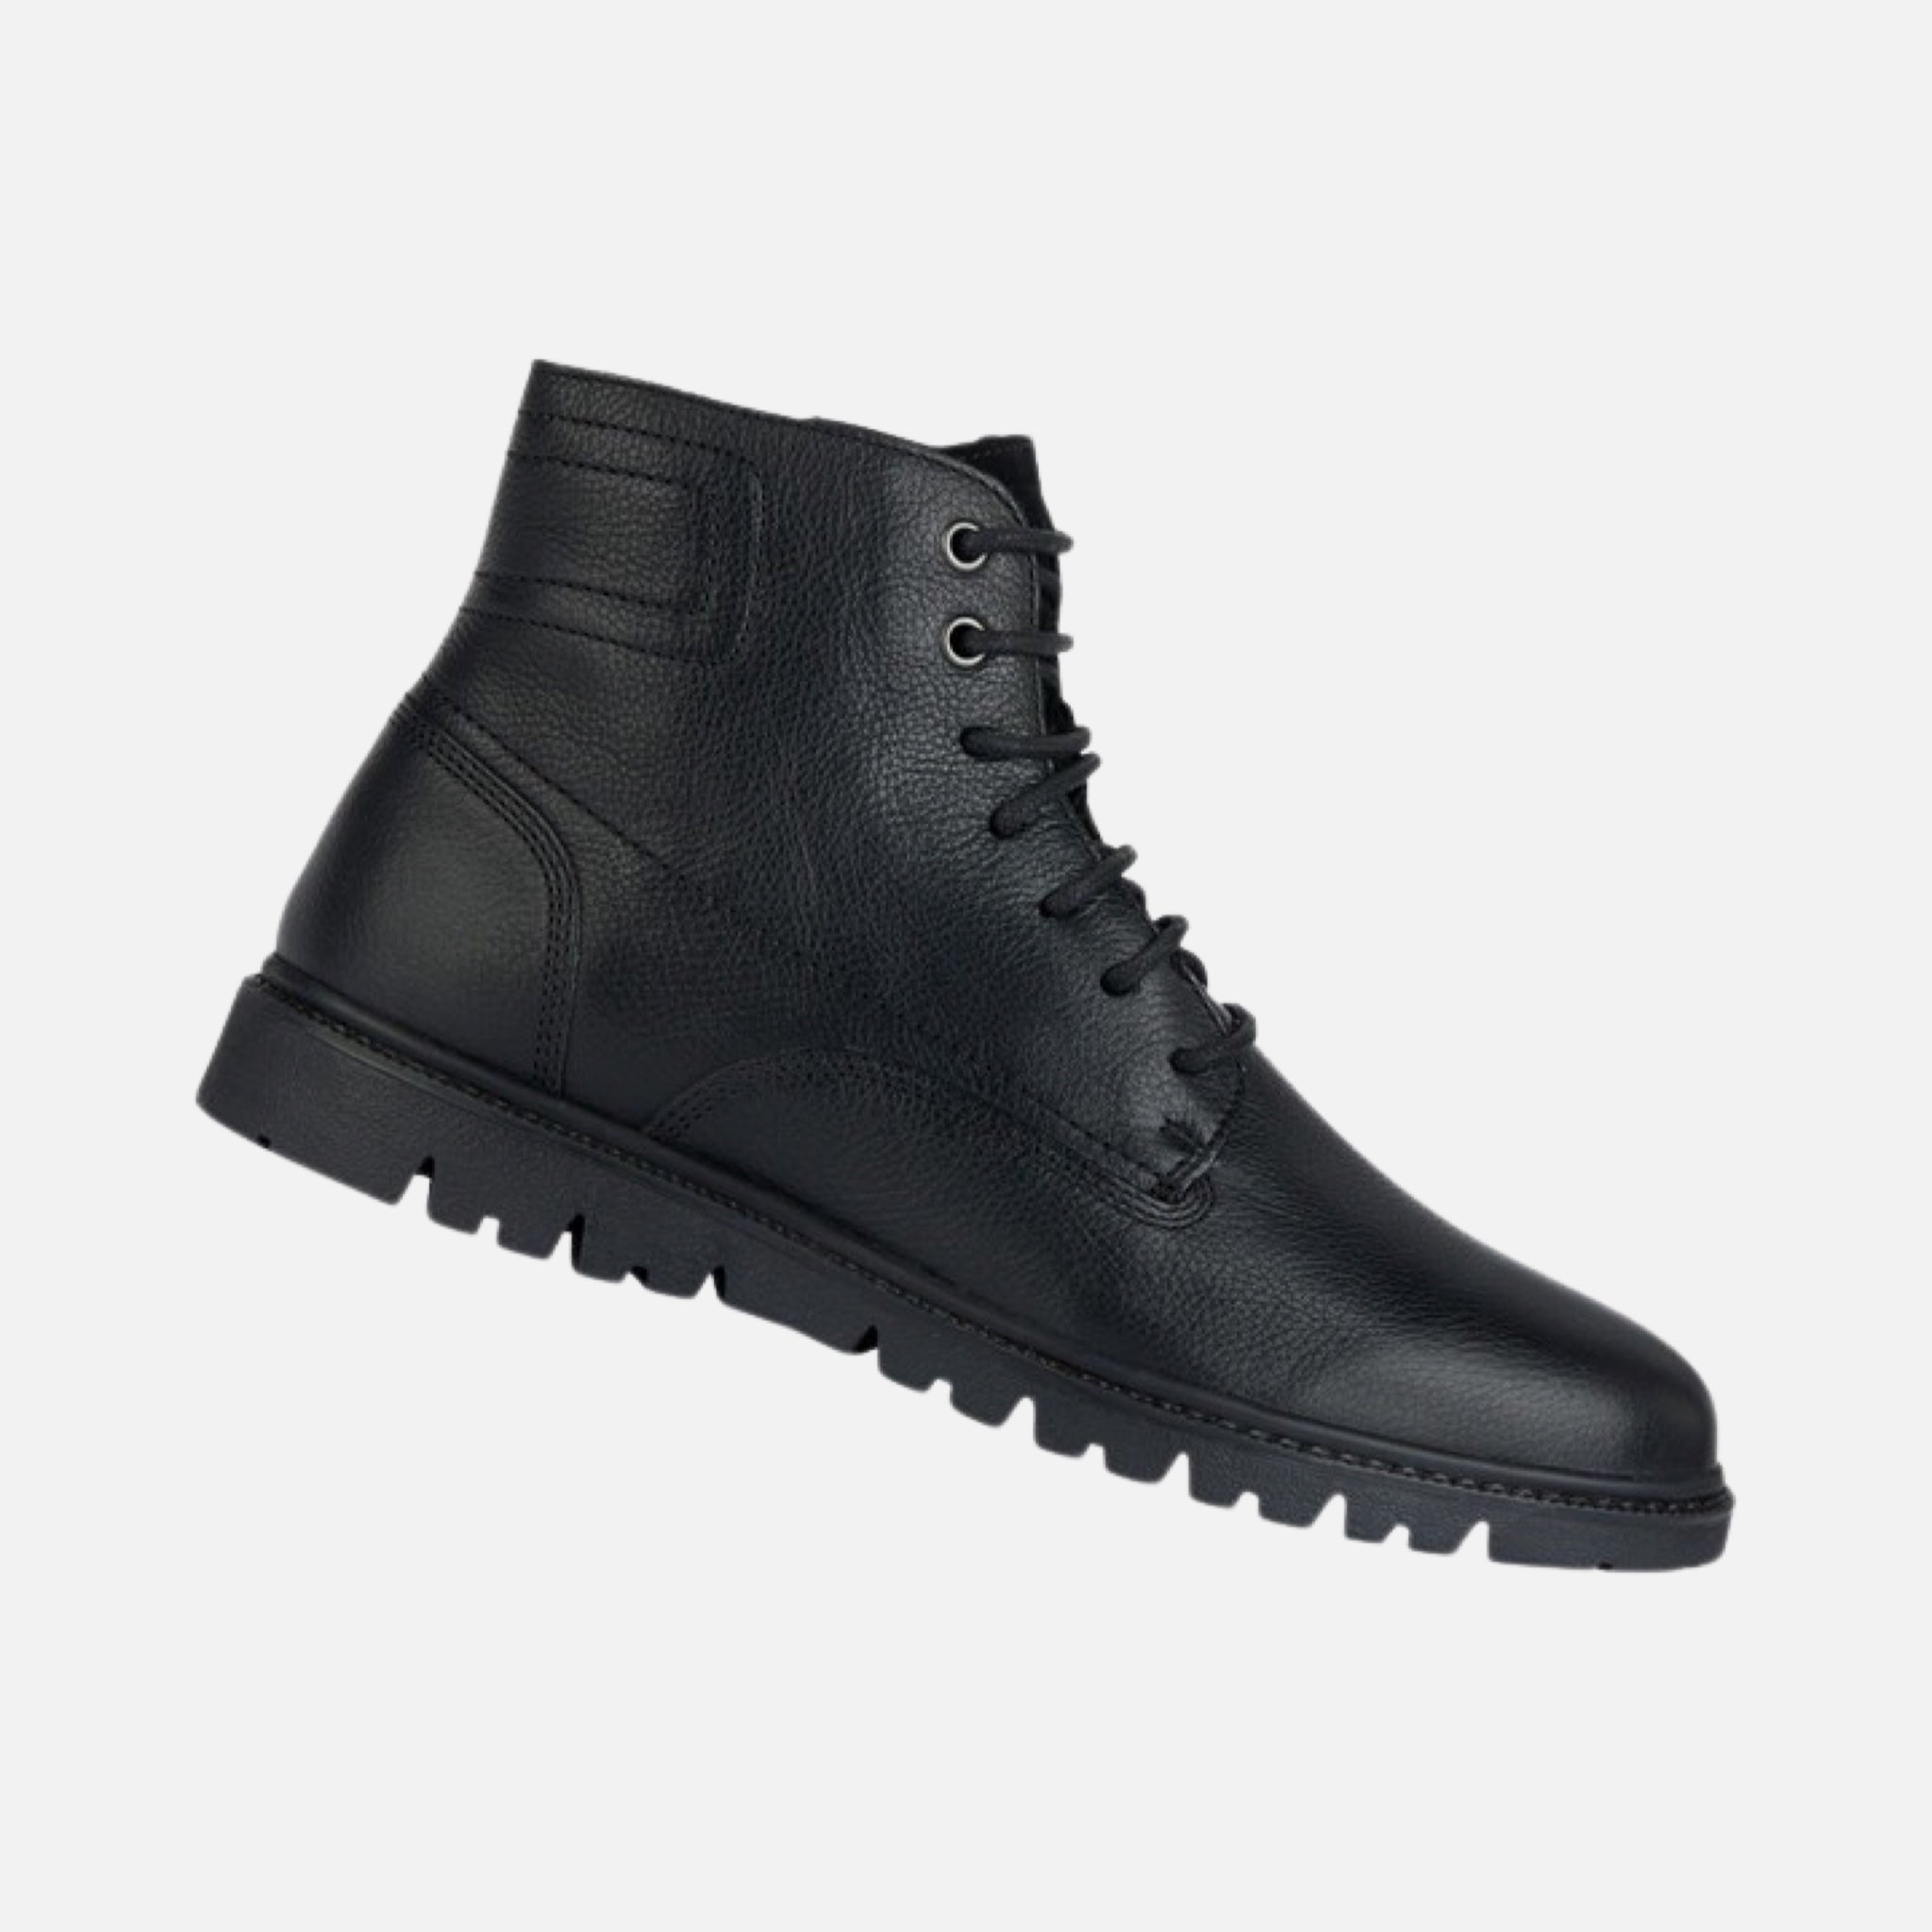 Geox Ghiacciaio Urban Black Leather Shoe - Clearance